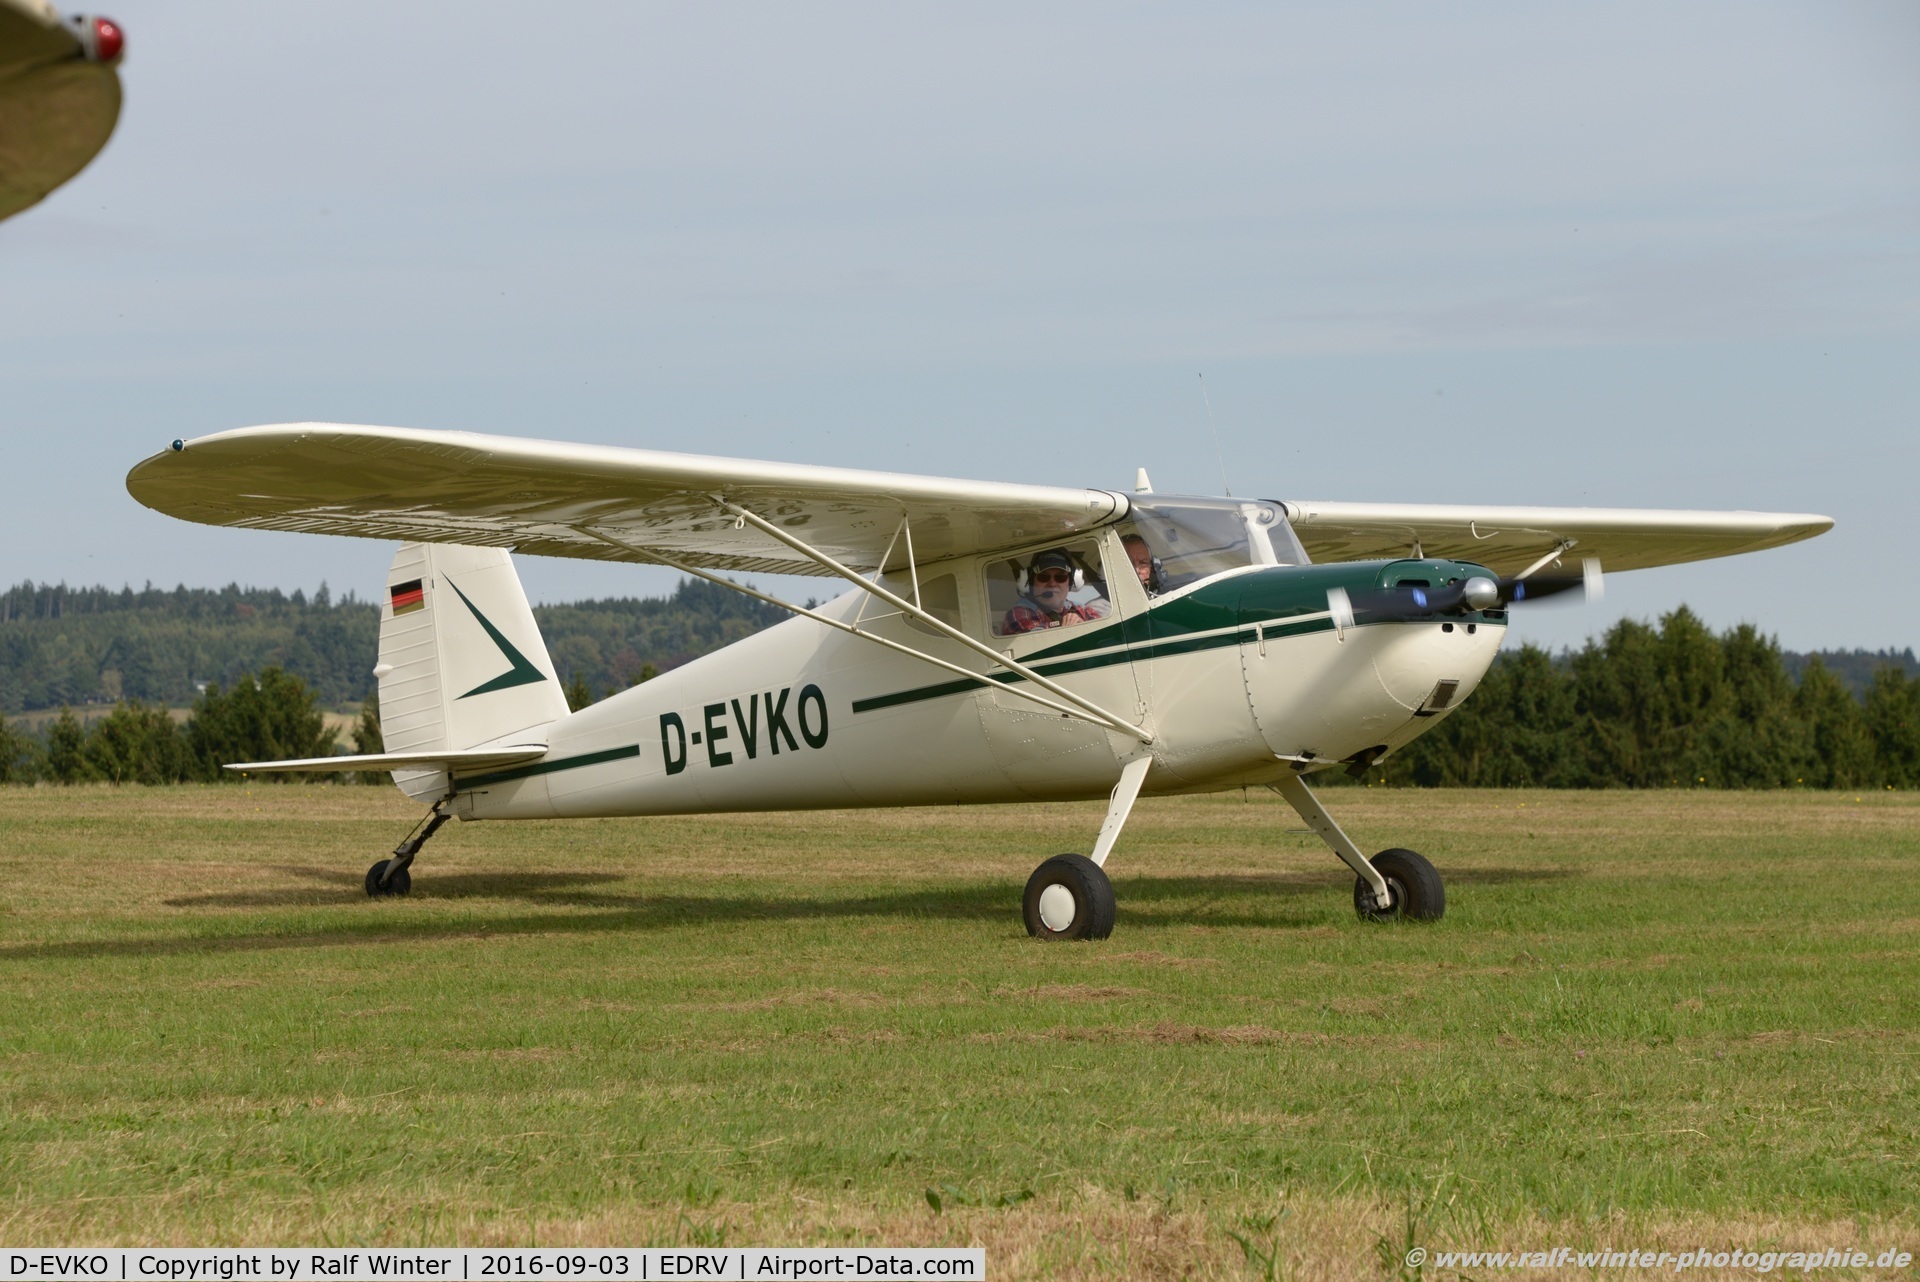 D-EVKO, 1946 Cessna 140 C/N 8936, Cessna 140 - Private - 8936 - D-EVKO - 03.09.2016 - EDRV